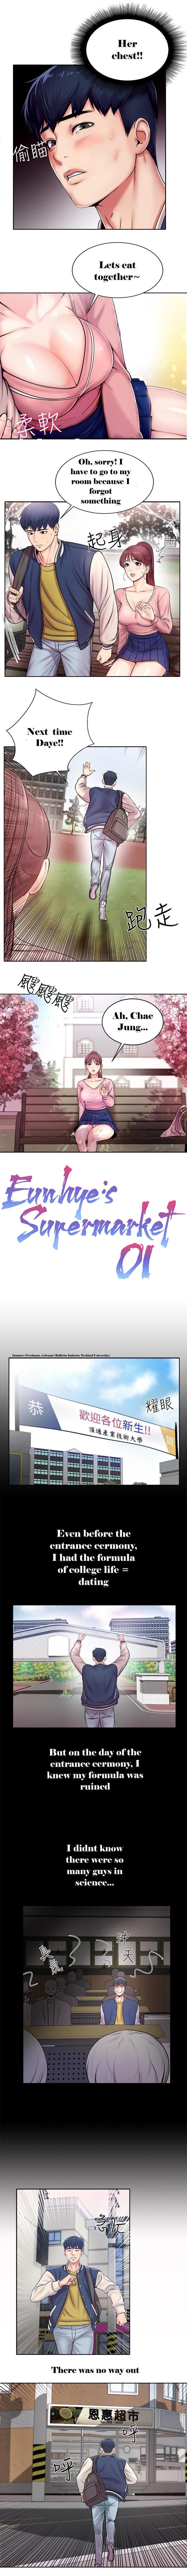 Swing Eunhye's Supermarket Ch.1/? Gorda - Page 4